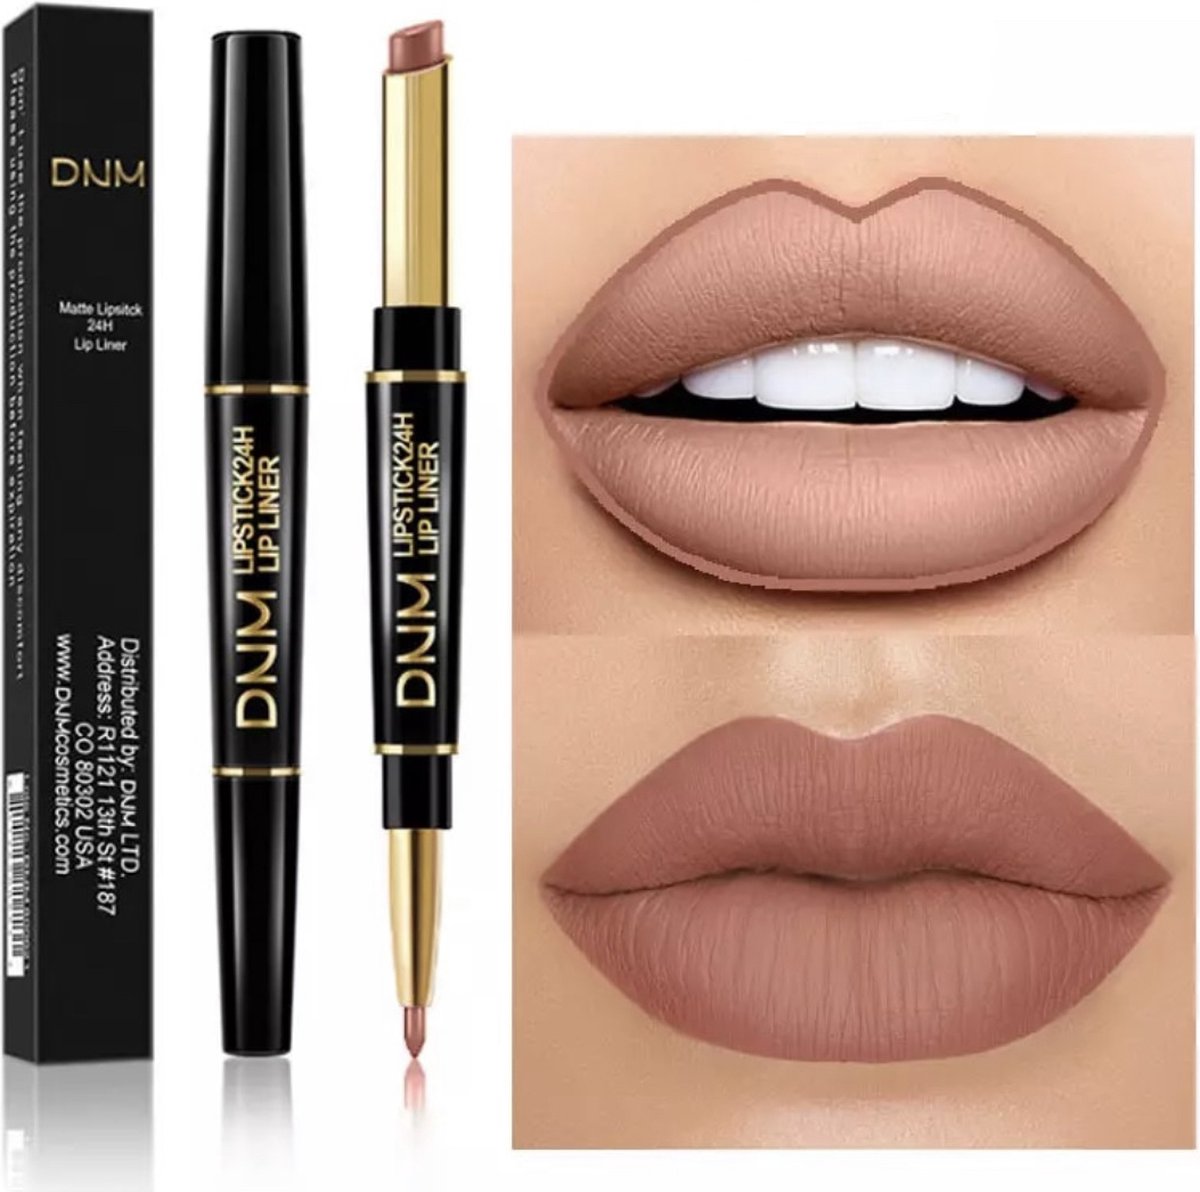 2 in 1 DNM Ltd. Lipstick & Lipliner - Matte Lippenstift & Potlood - Rozebruin - Moisturizing Contour Lip Liner - Watervast - Cosmetica - Roze Bruin